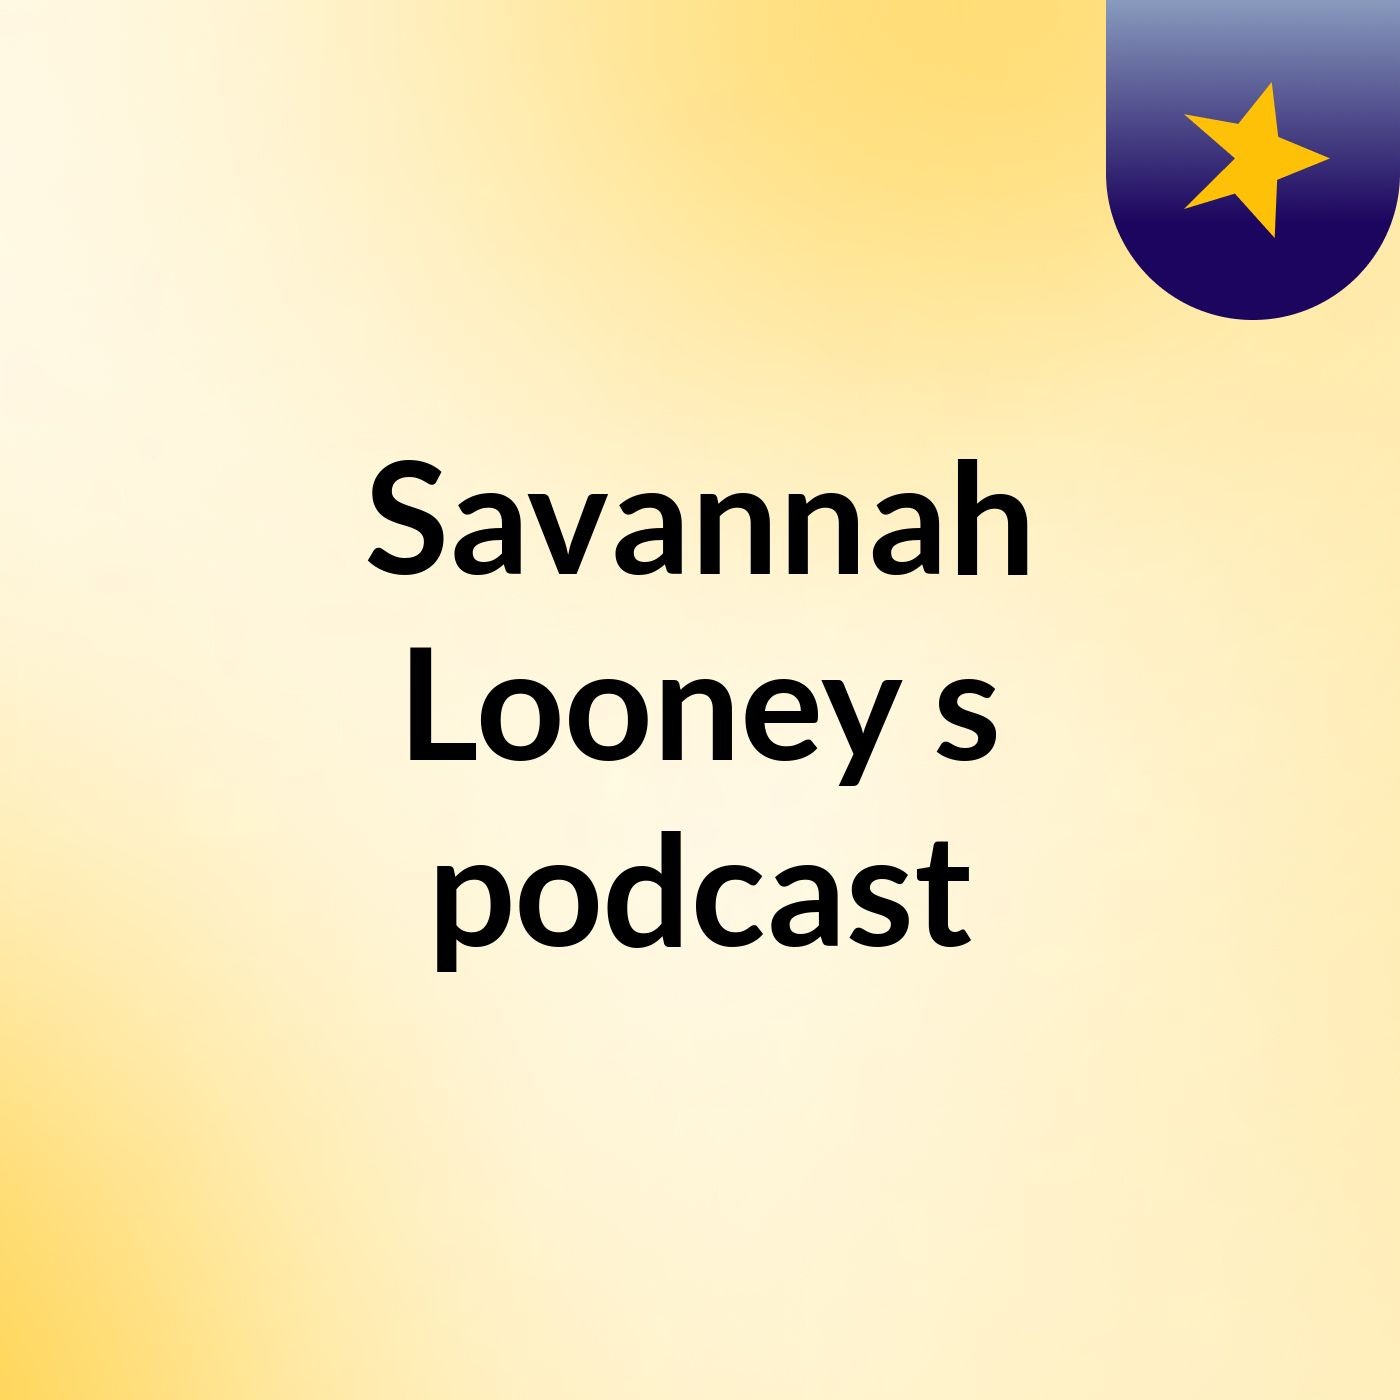 Episode 2 - Savannah Looney's podcast